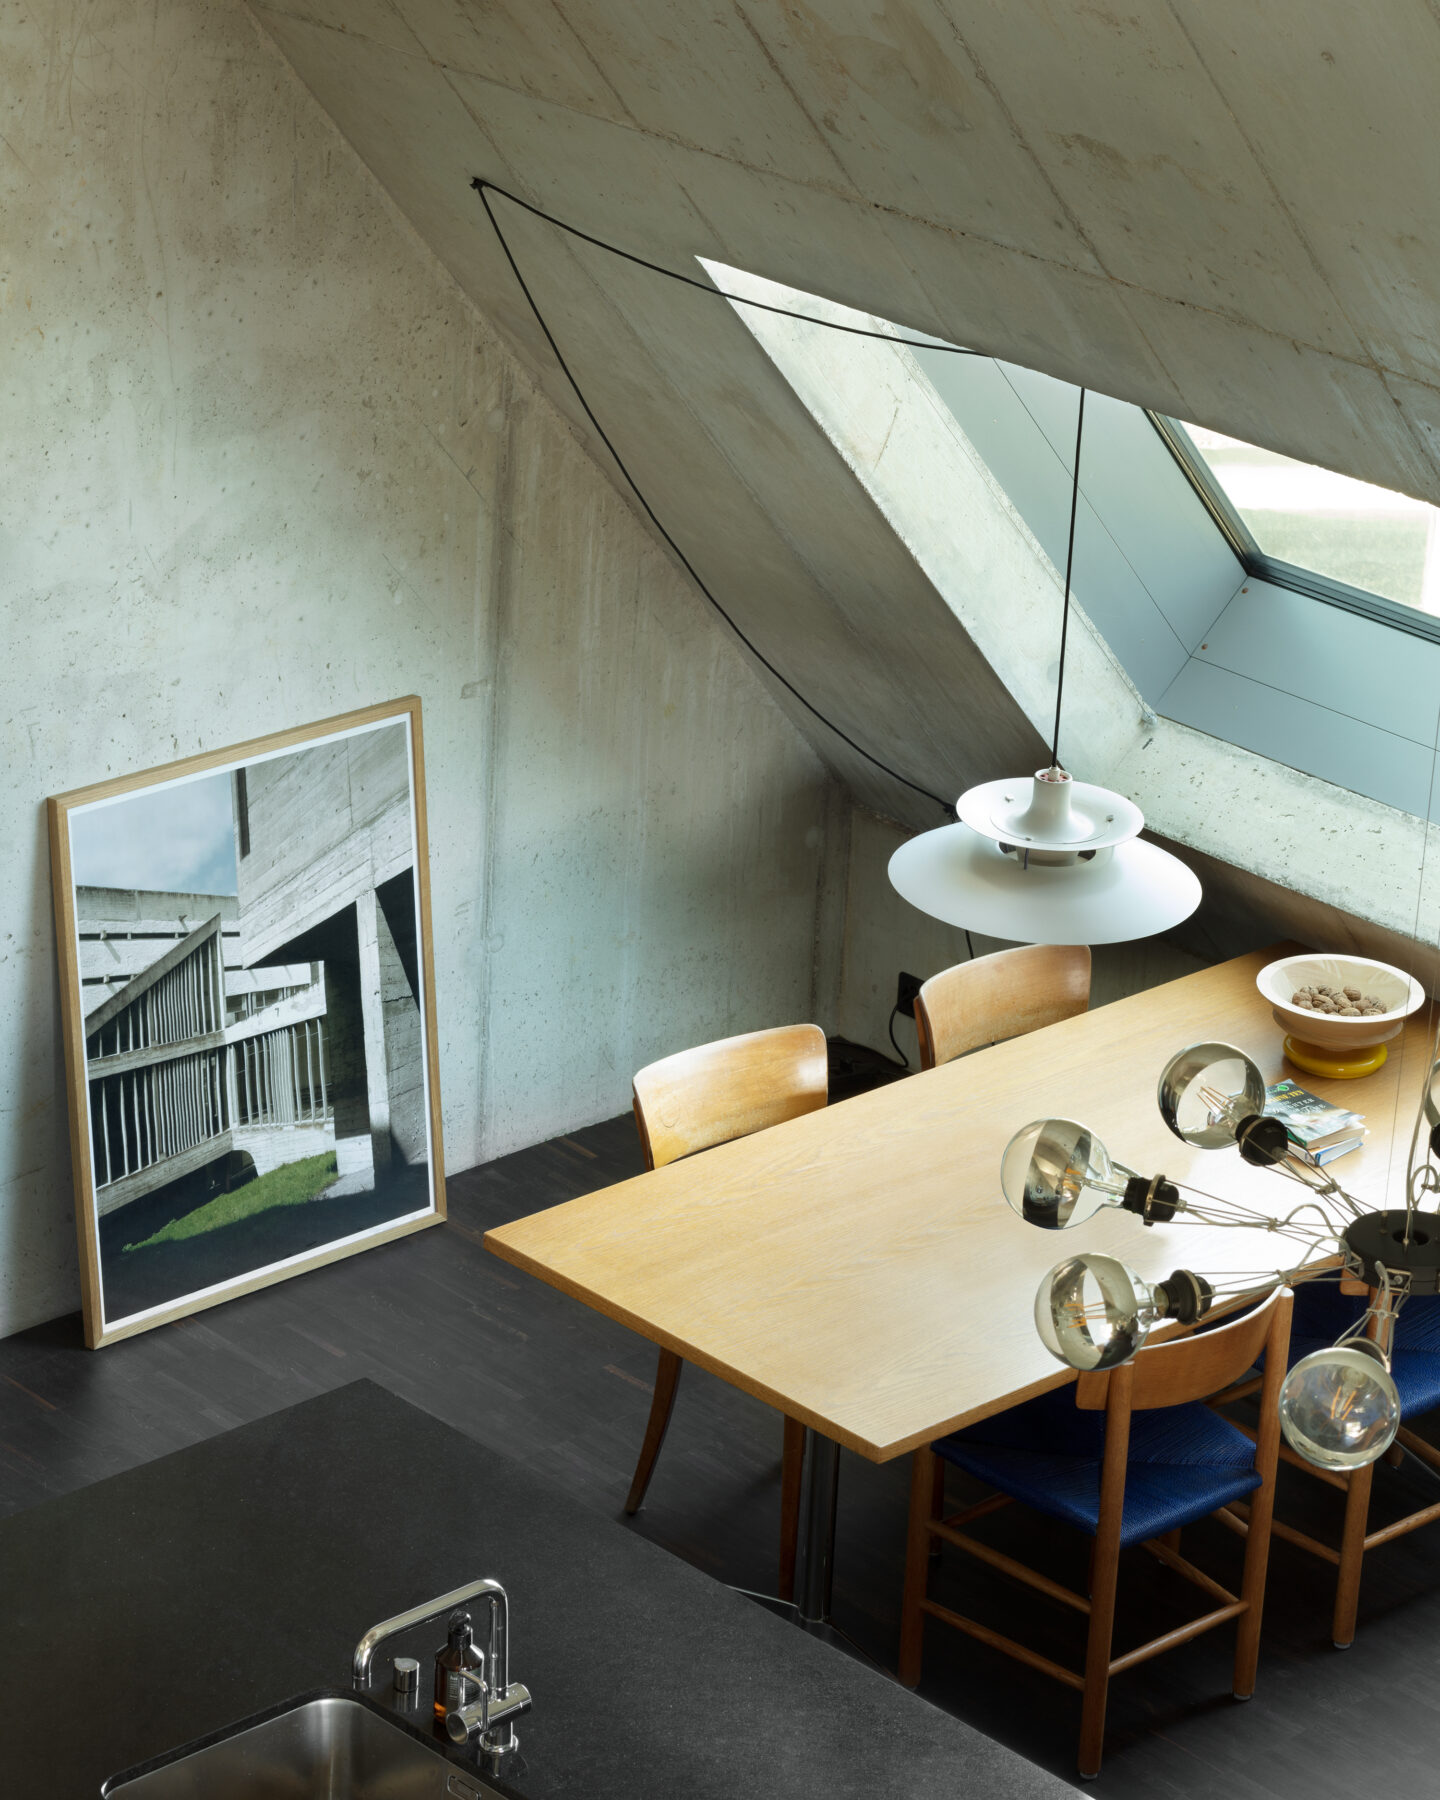 Archisearch Hardstrasse 43 Loft in Basel, Switzerland by Miller & Maranta architects